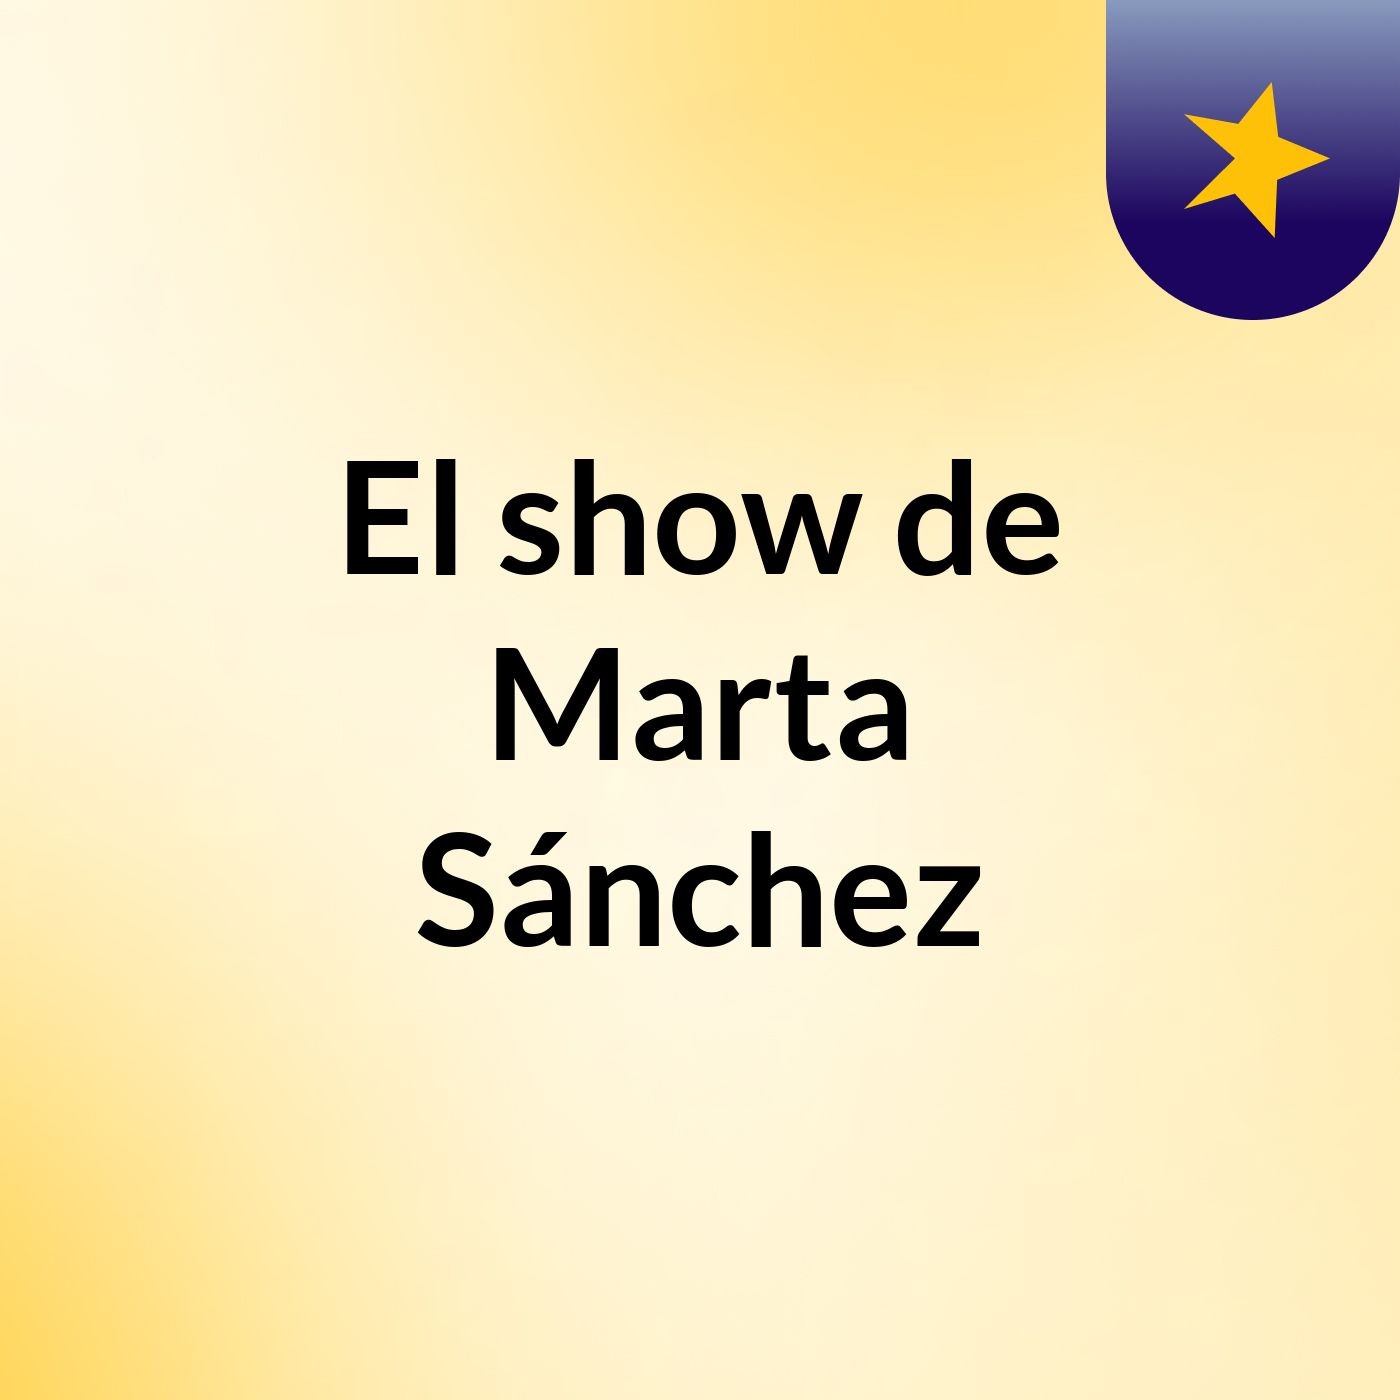 El show de Marta Sánchez